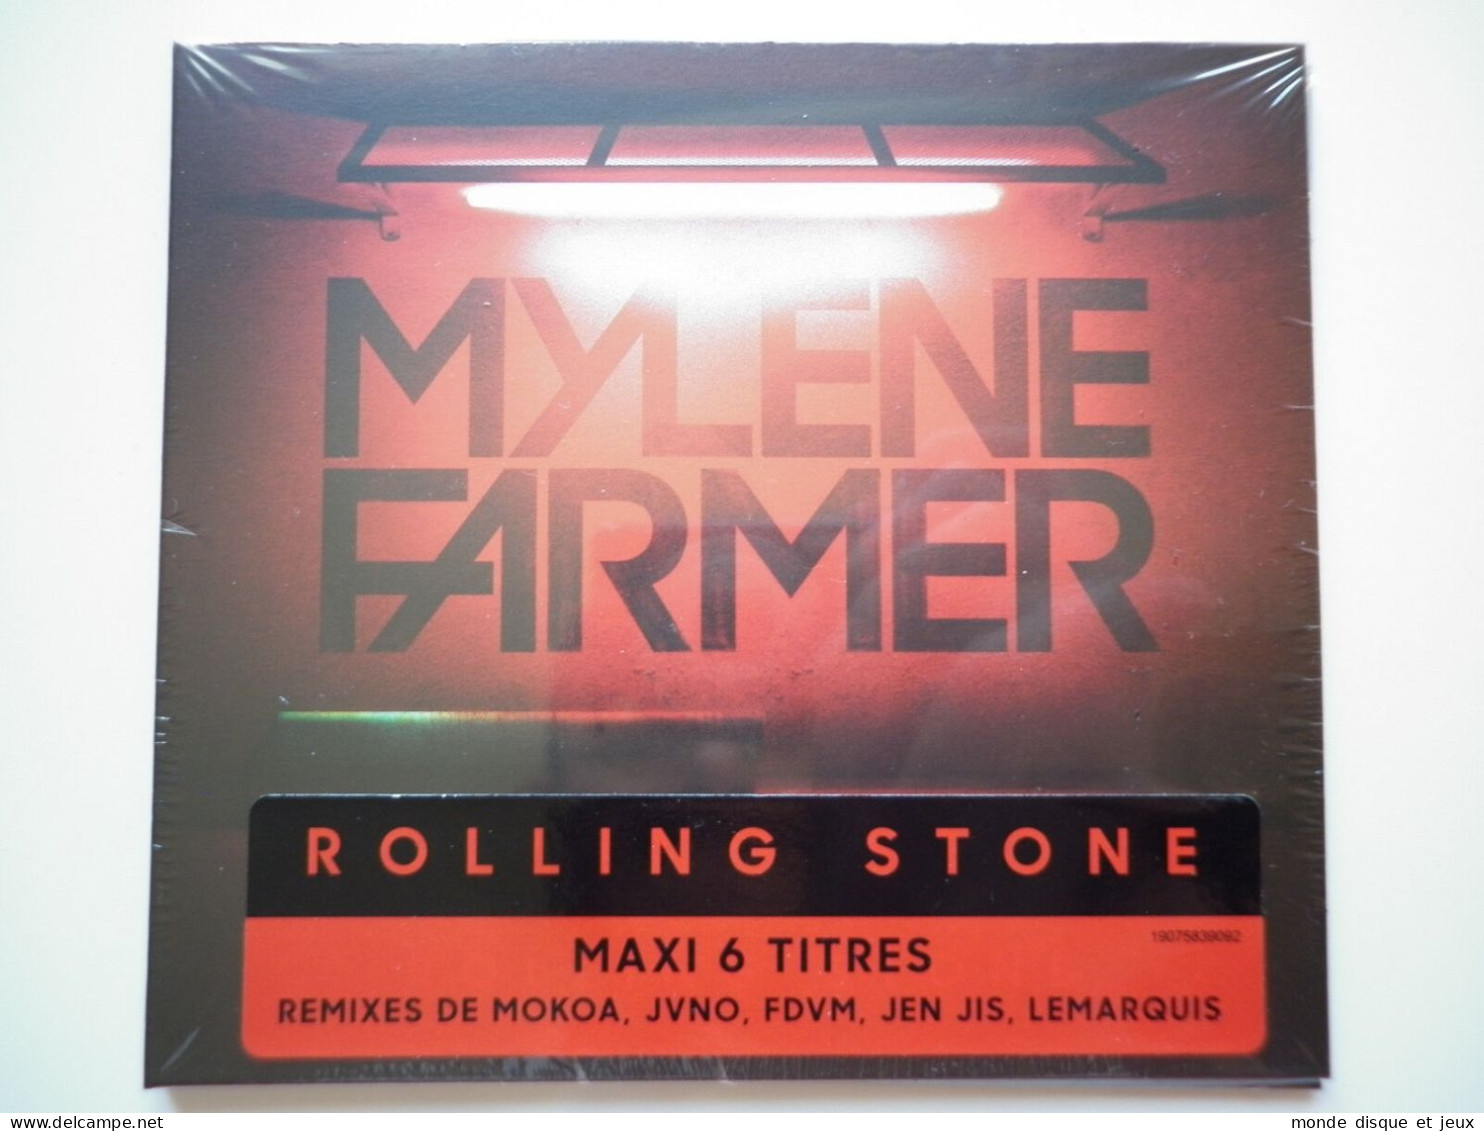 Mylene Farmer Cd Maxi Rolling Stone - Other - French Music